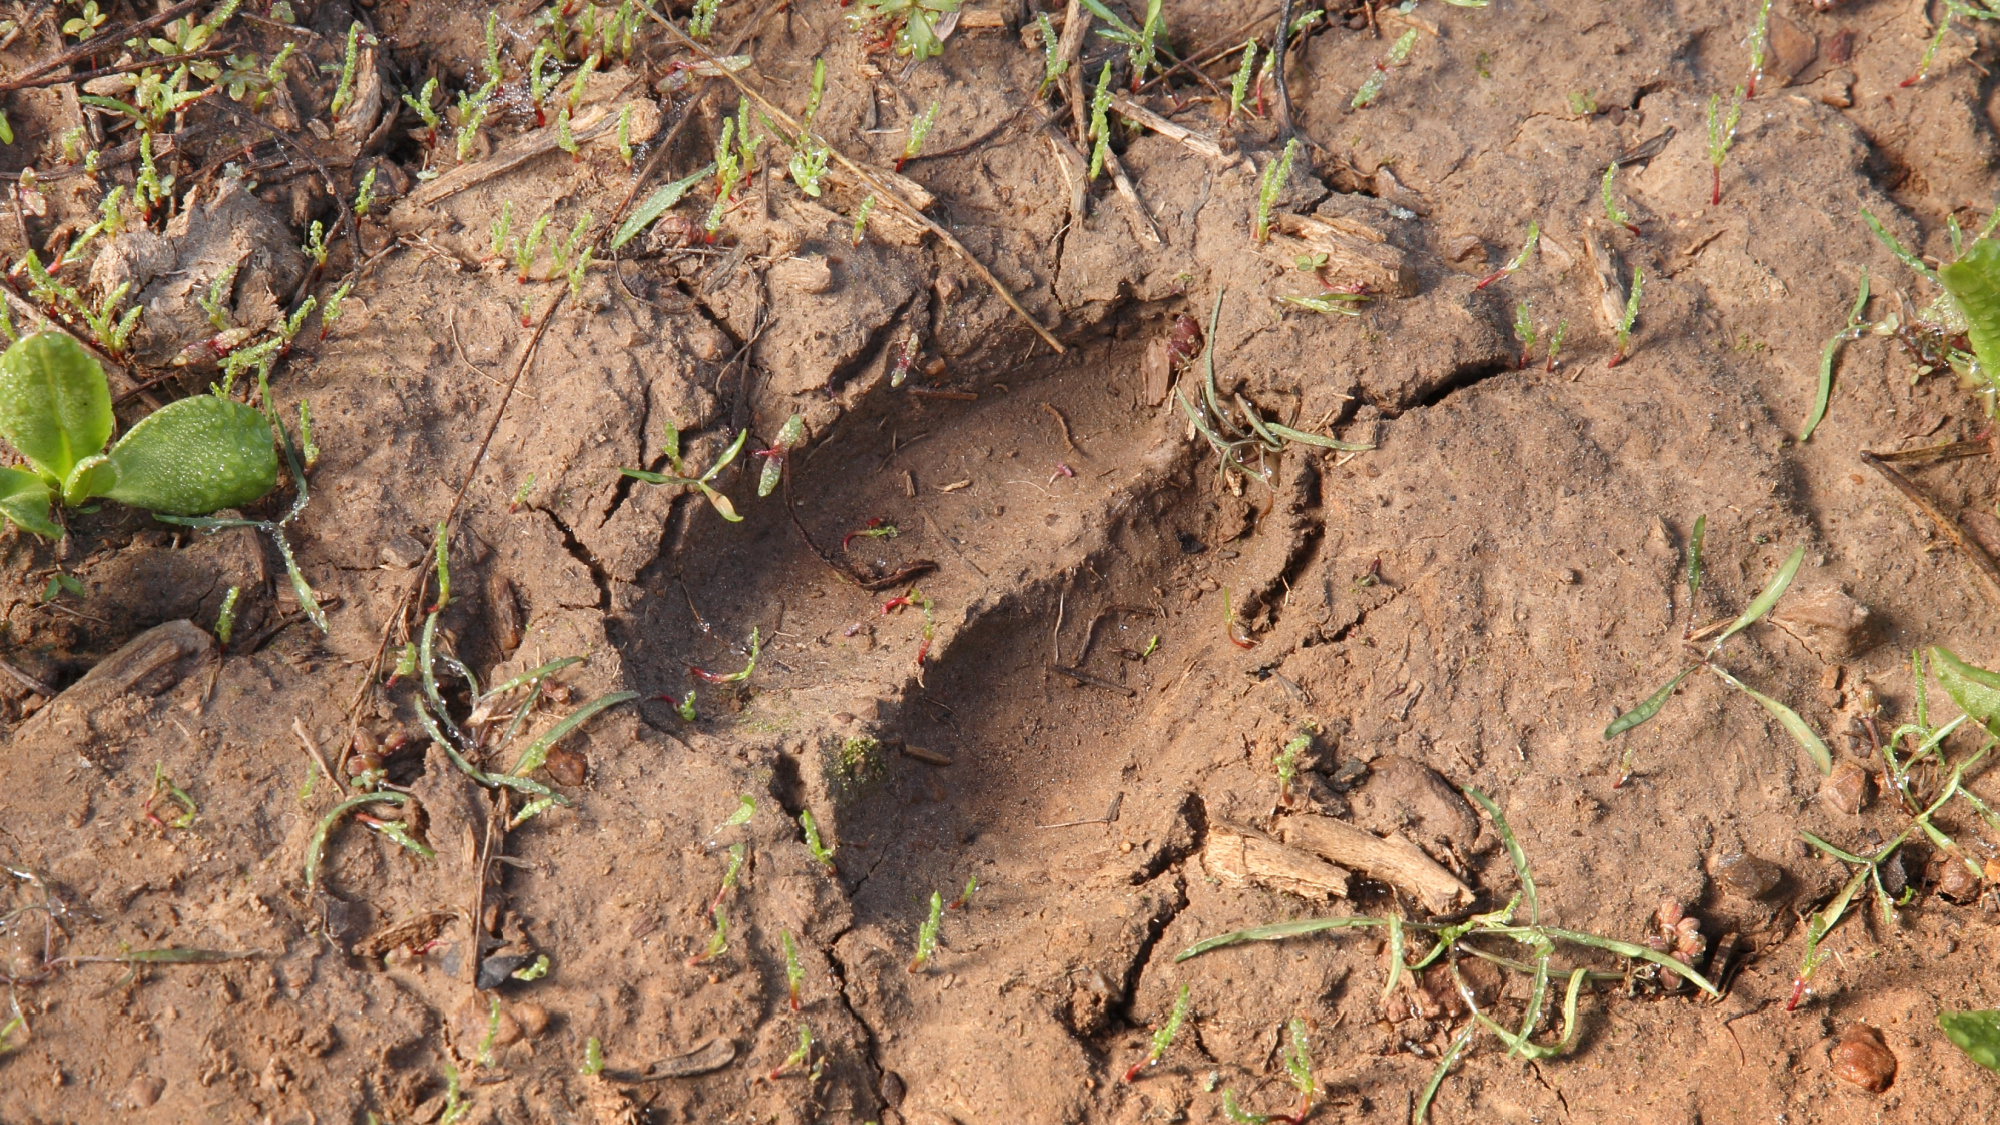 A deer track is pressed into mud.